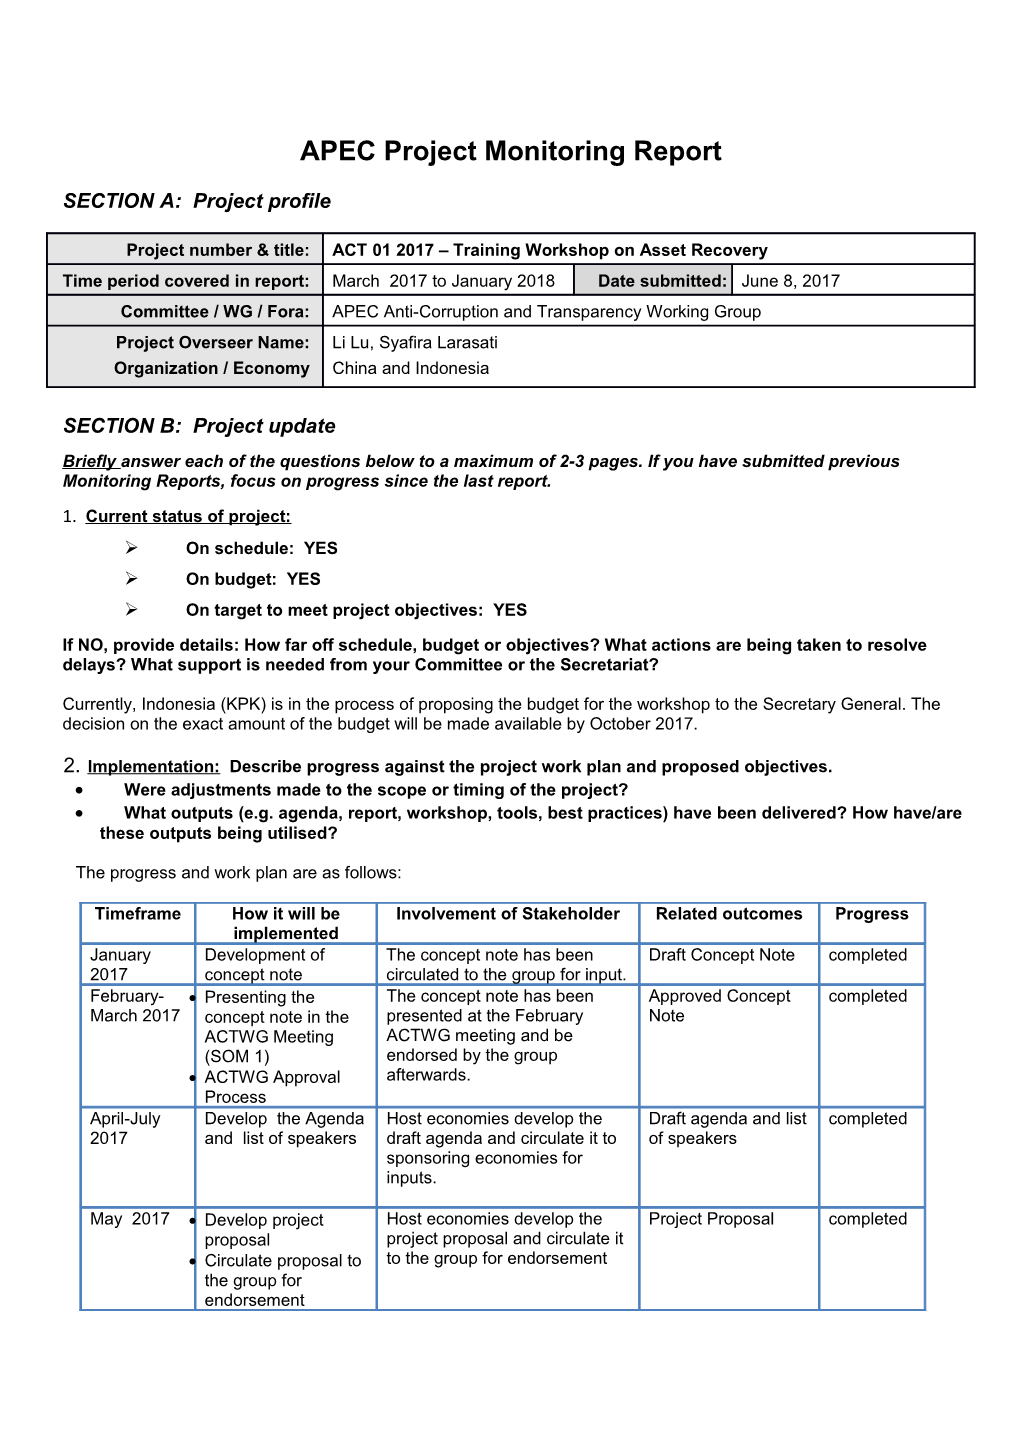 APEC Project Monitoring Report